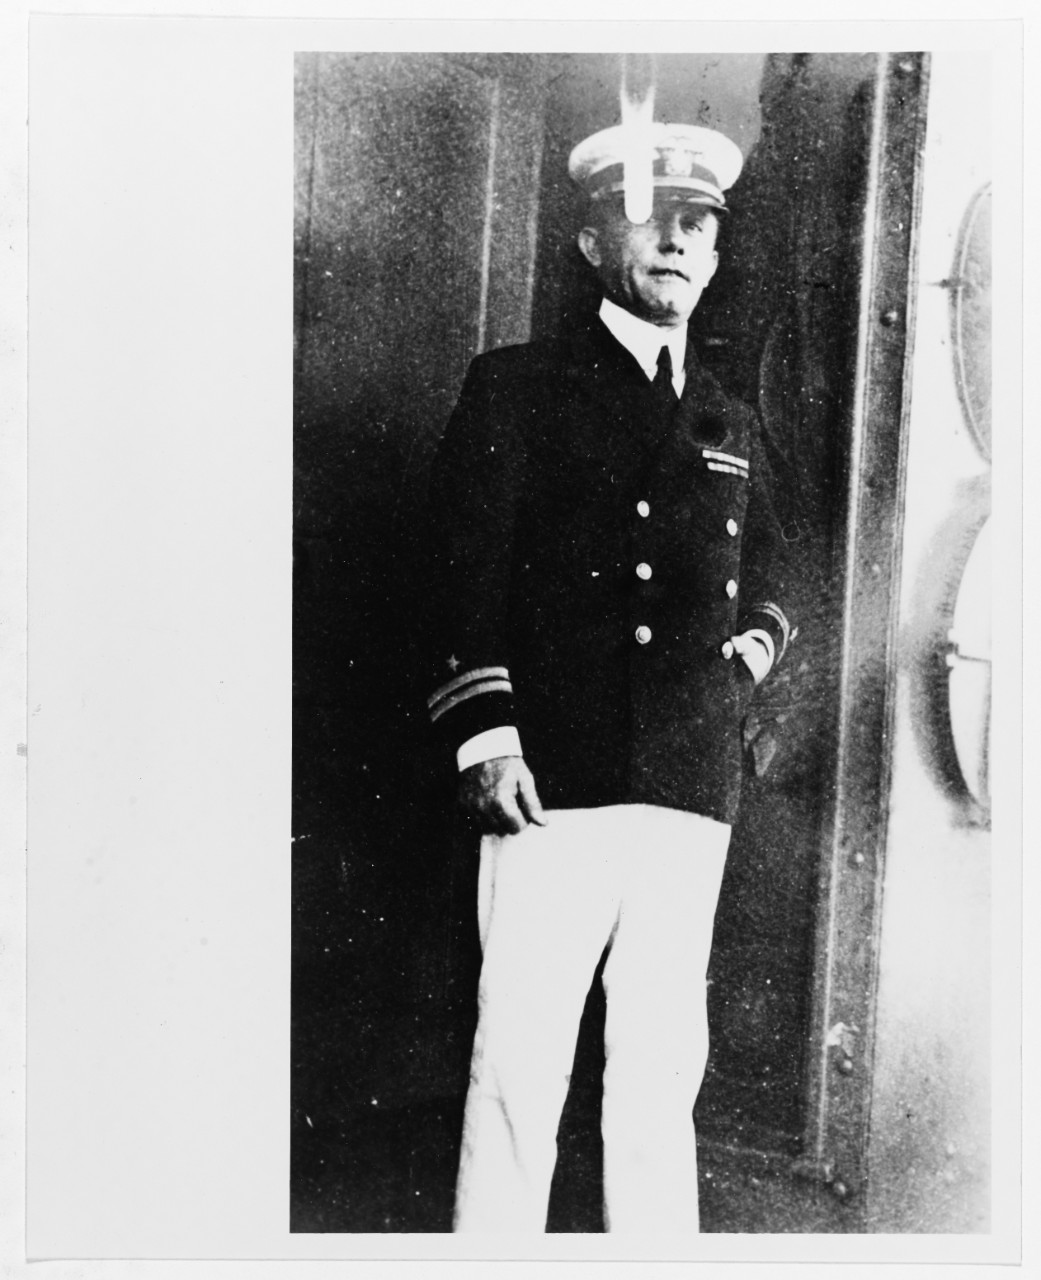 Lieutenant William Fremgen, USN